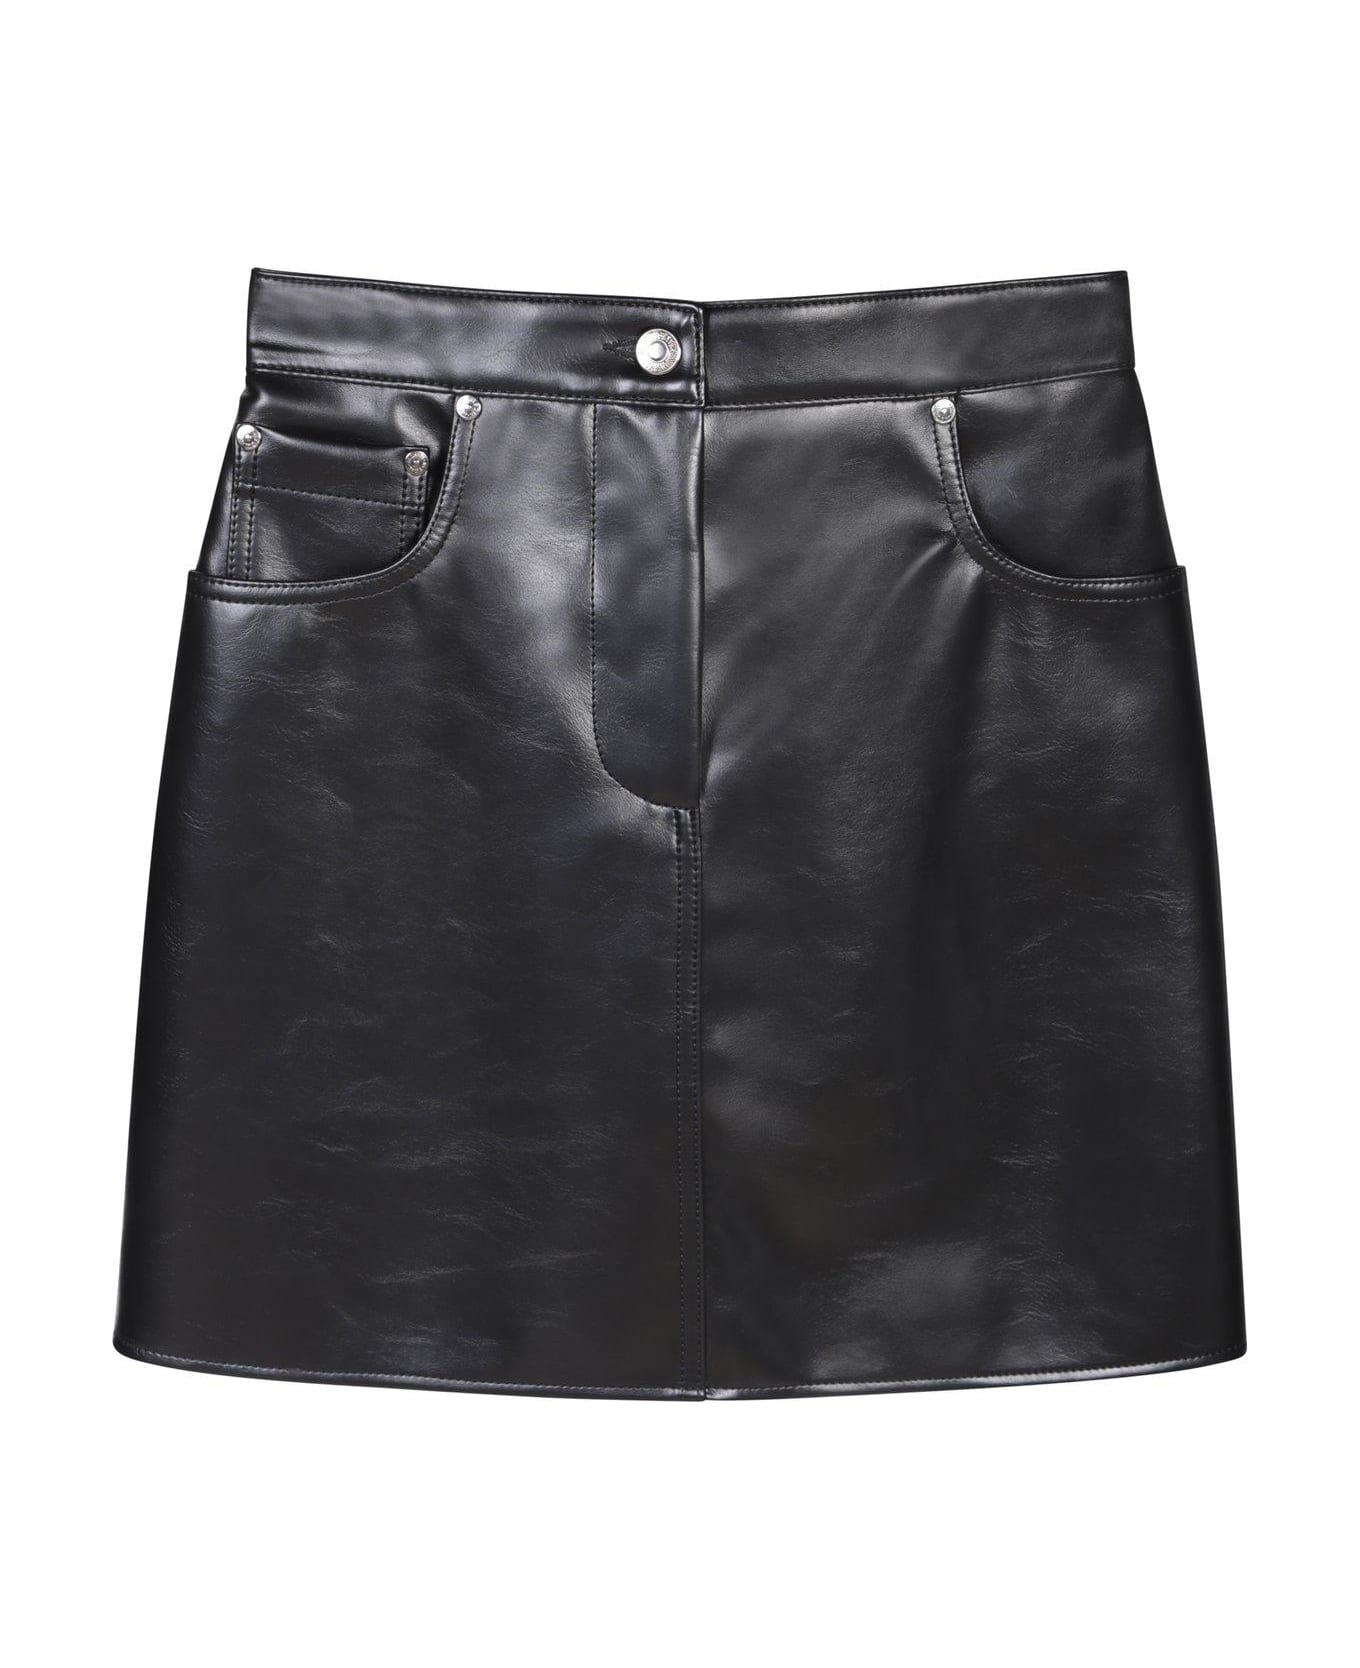 MSGM High Waist Slim Cut Mini Skirt - Black スカート